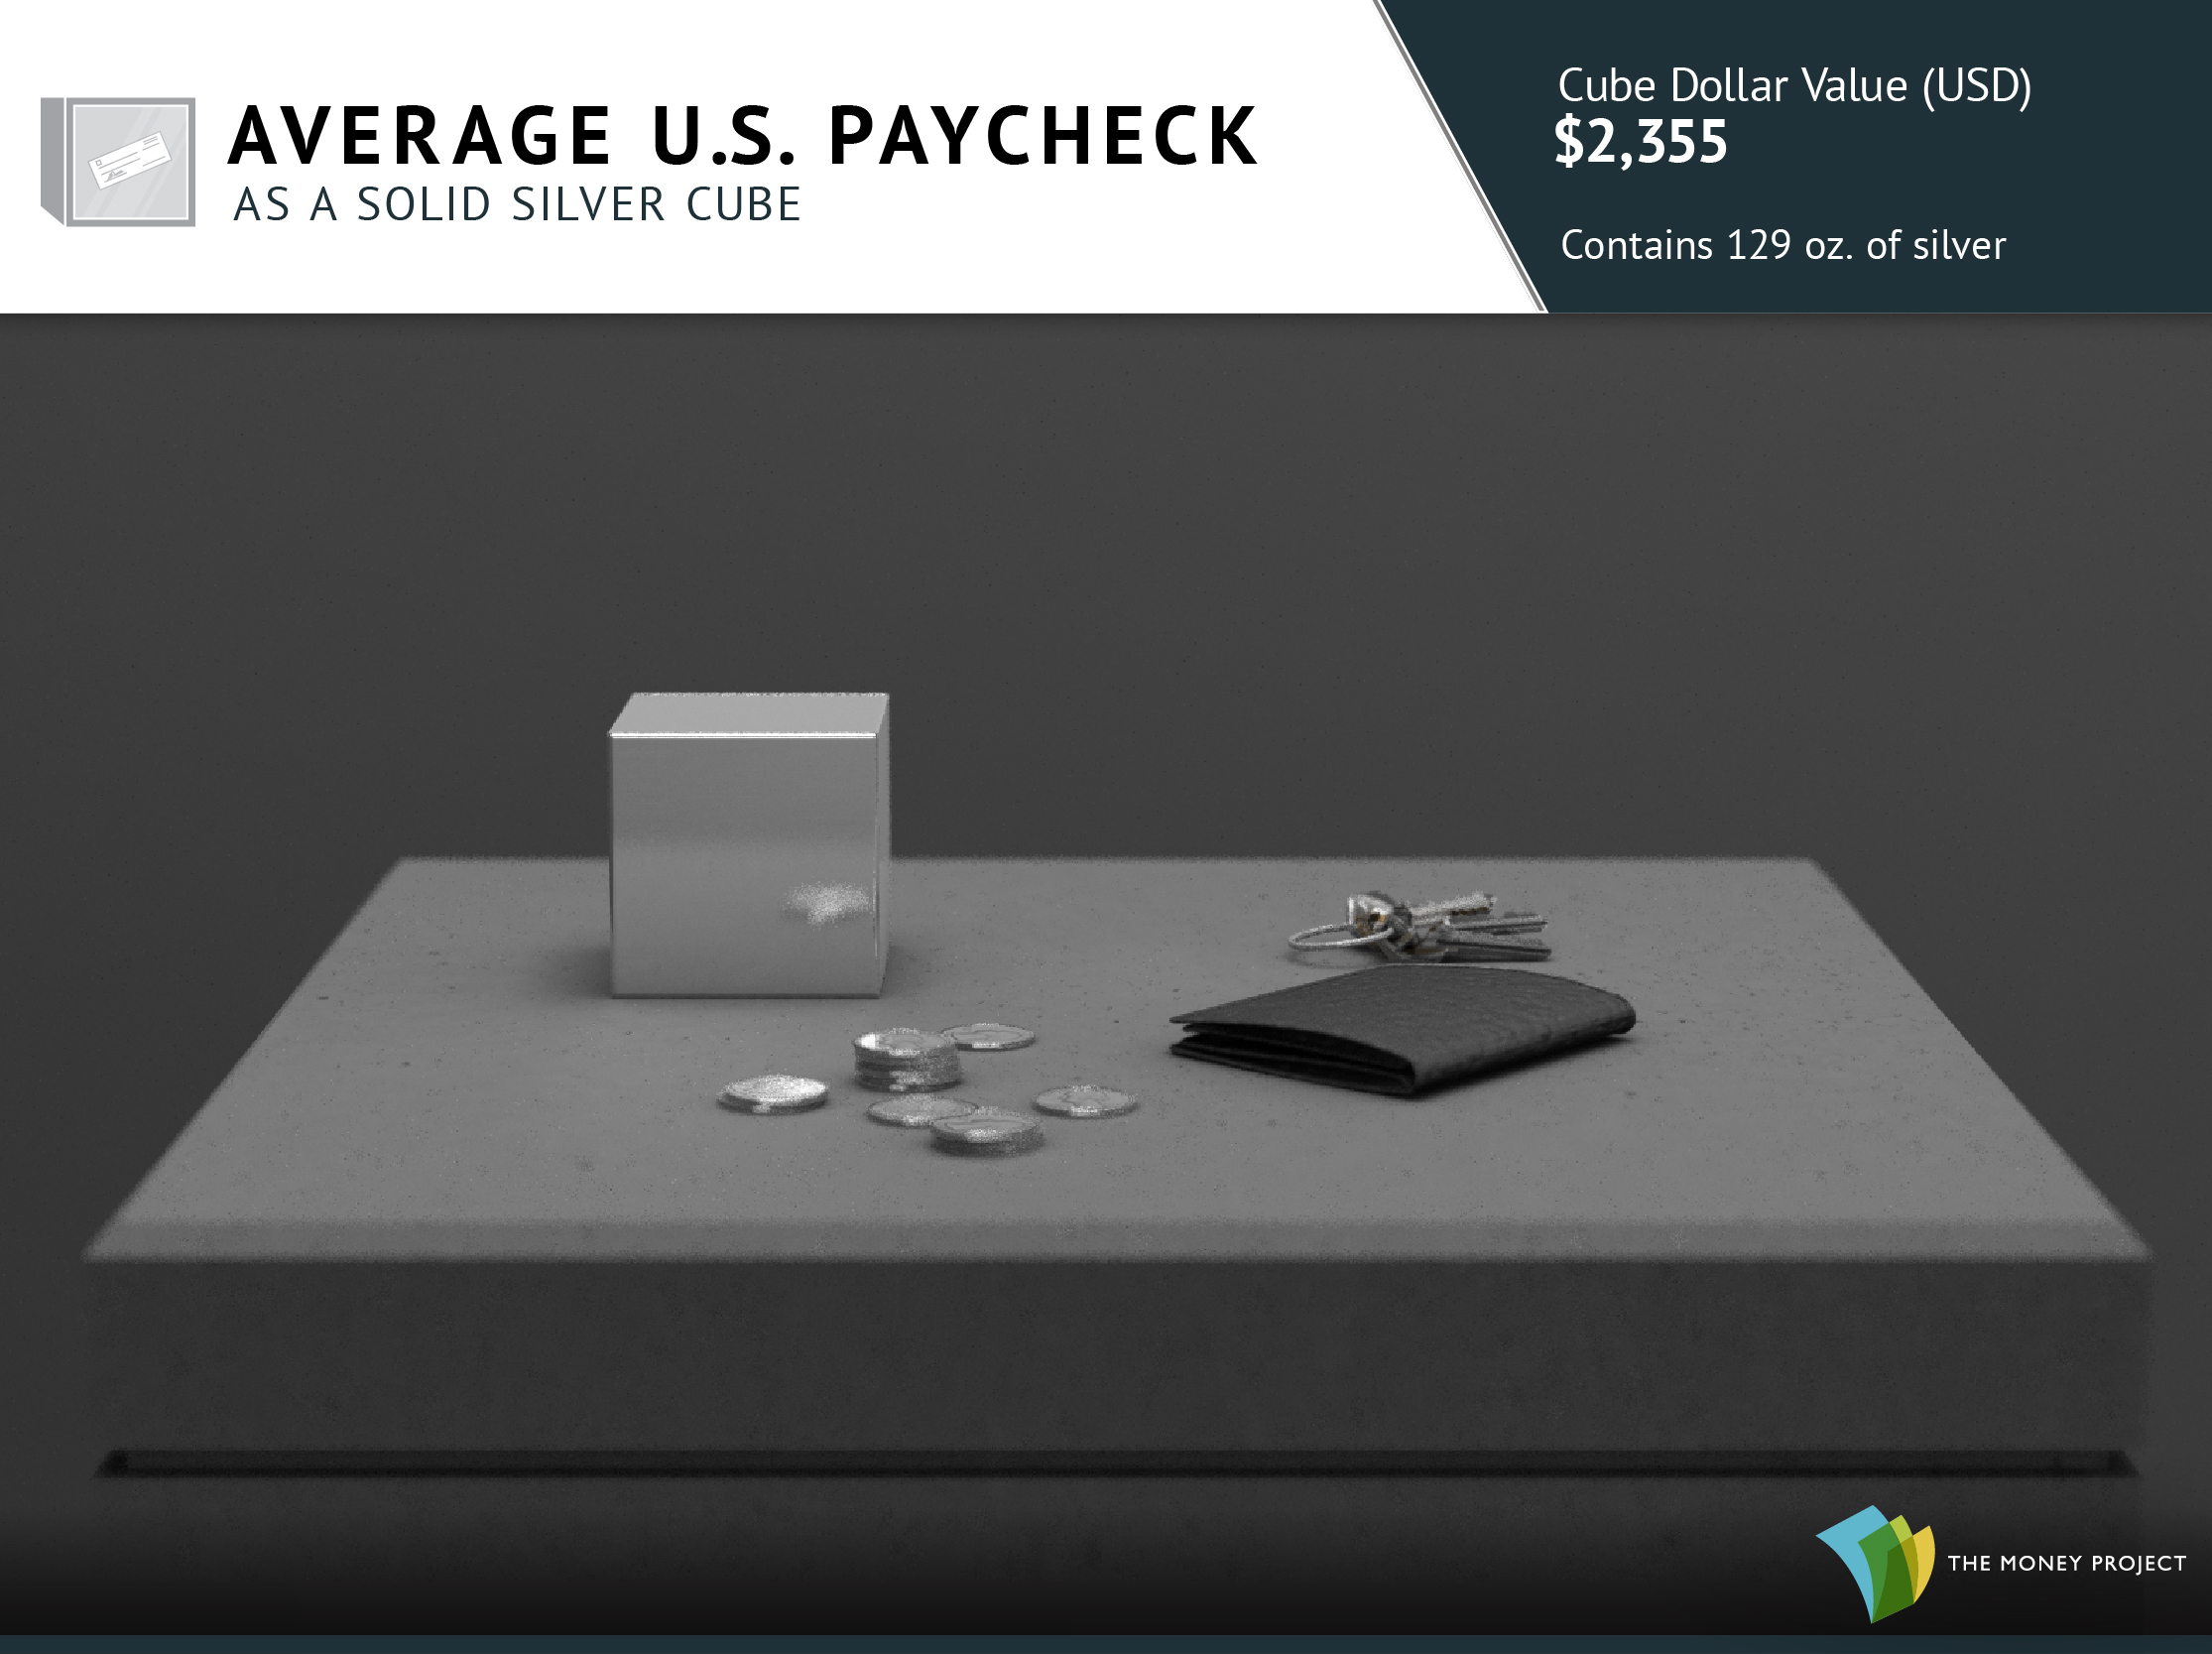 Average U.S. Paycheck as a Silver Cube